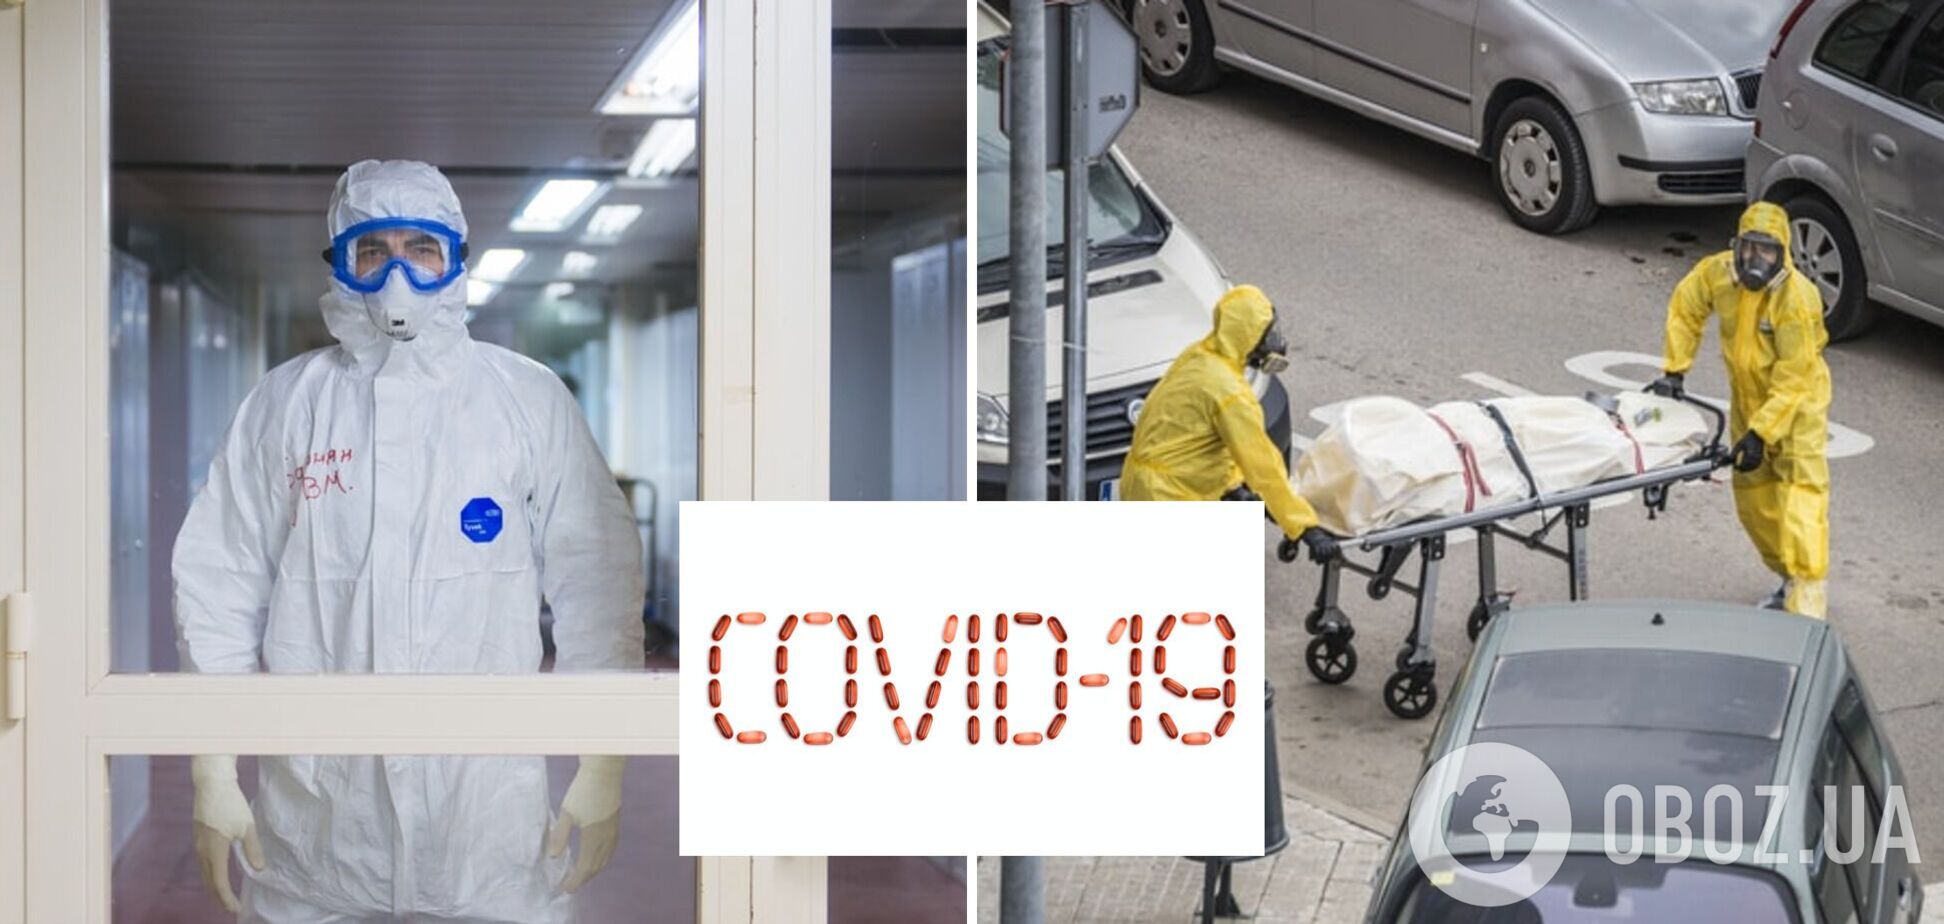 Антибиотики не помогут: врач указал на важный нюанс в лечении COVID-19